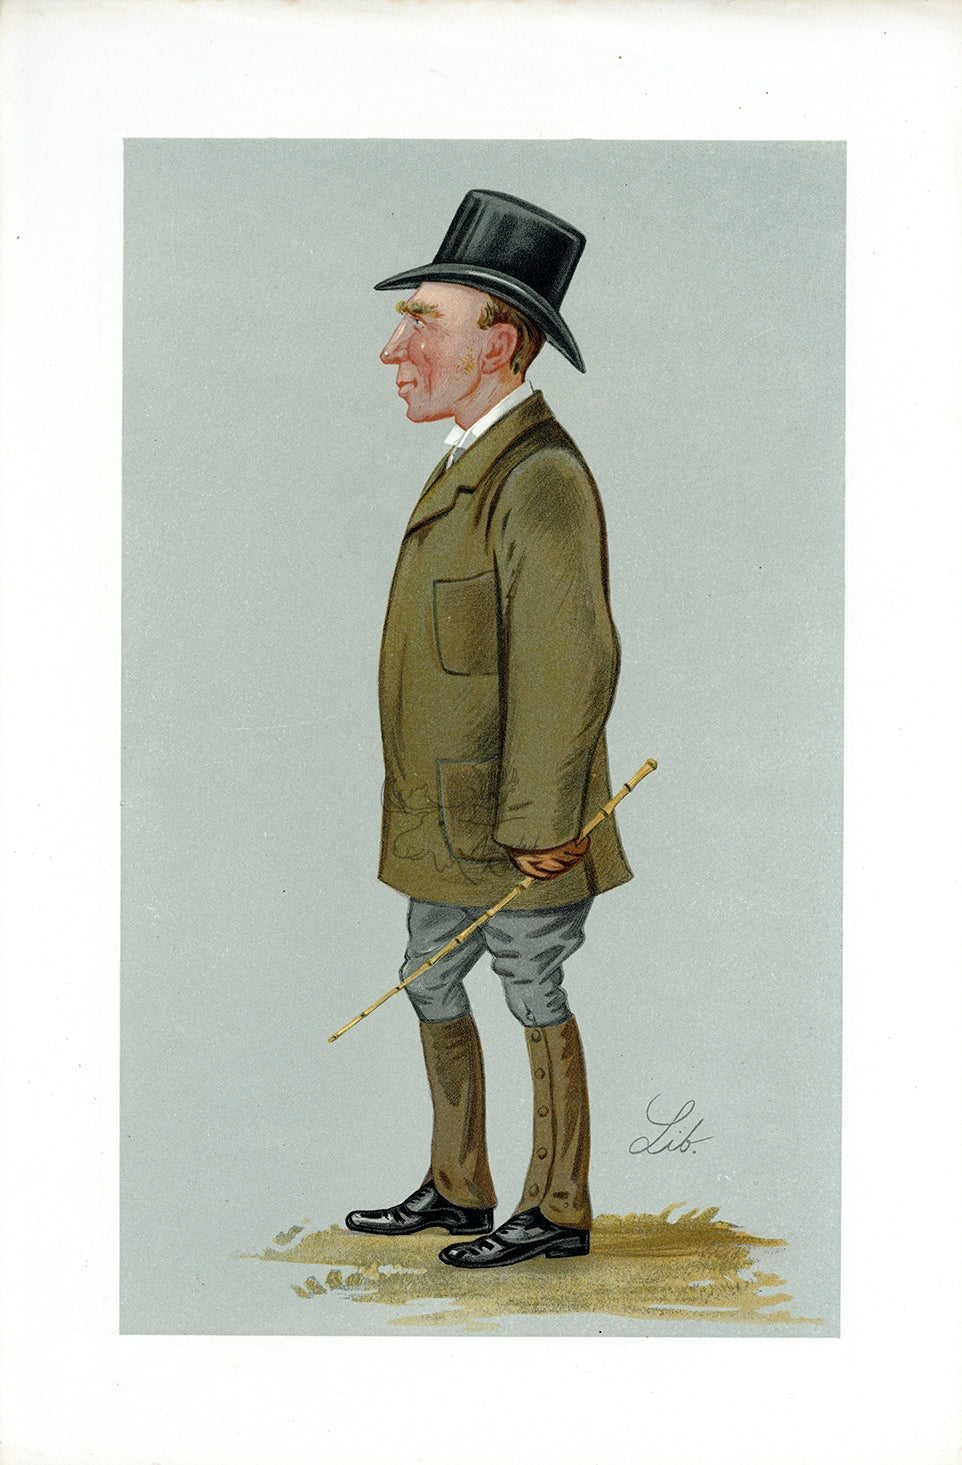 1889 Vanity Fair Caricature Proof Plate by Lib - Mr. John Porter Spy Print